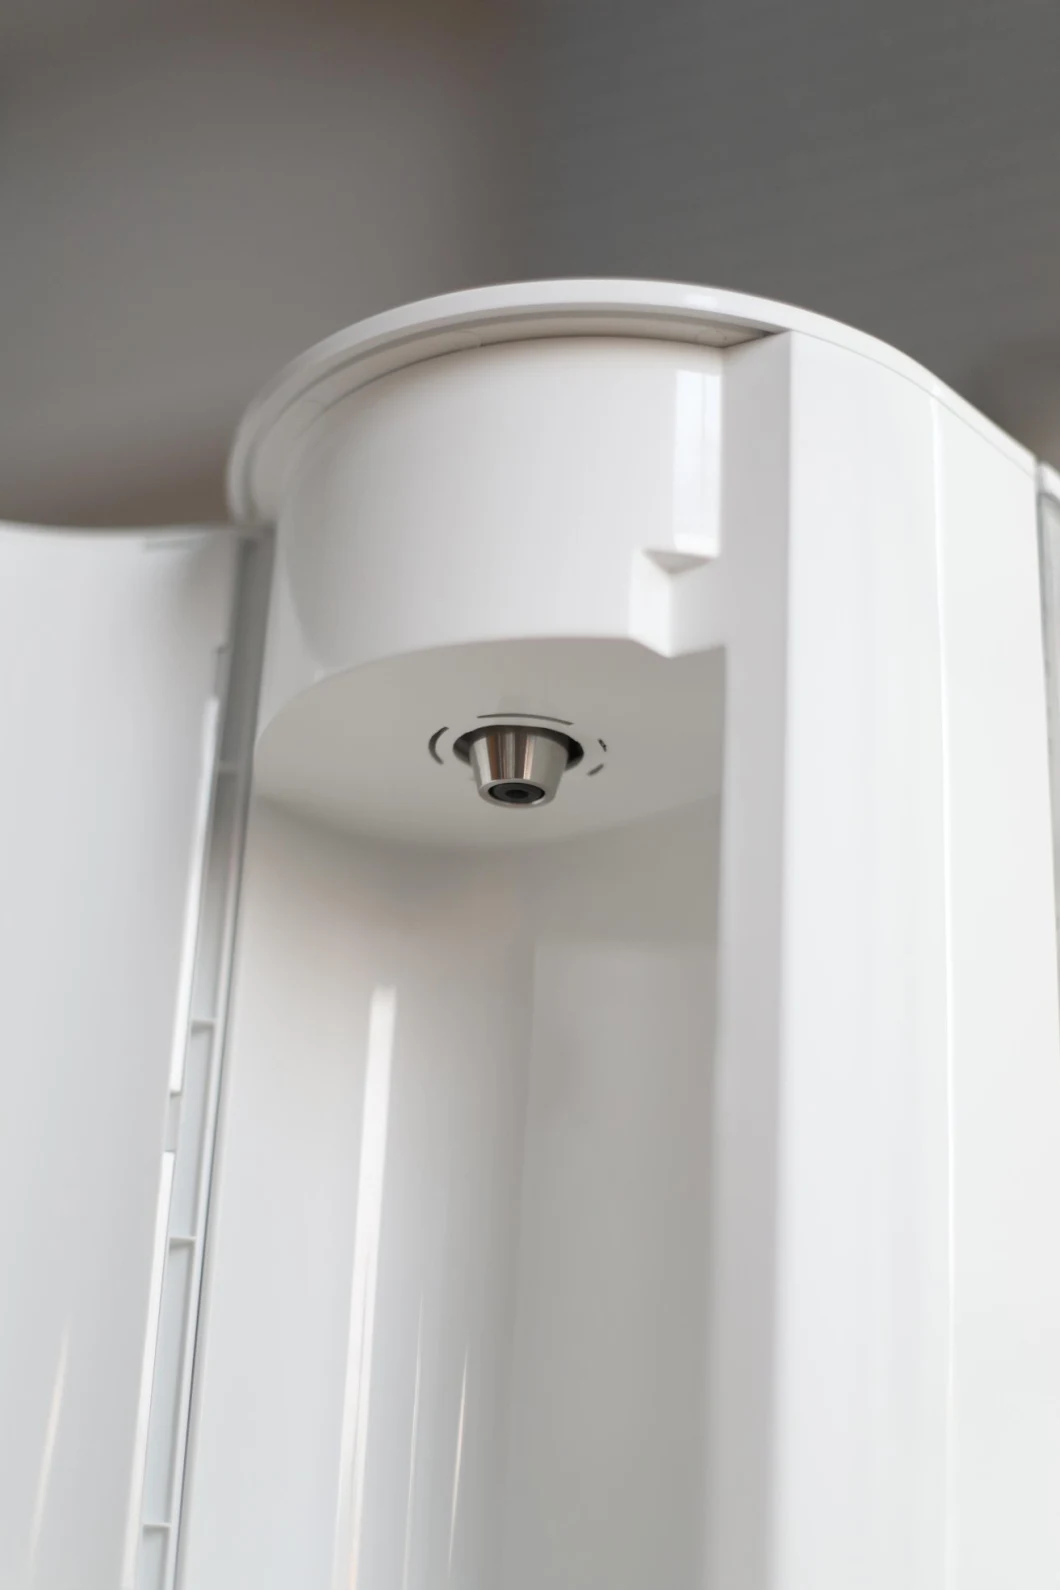 Hot or Warm Water Dispenser for Milk Power Baby Convenient Product Powder Machine